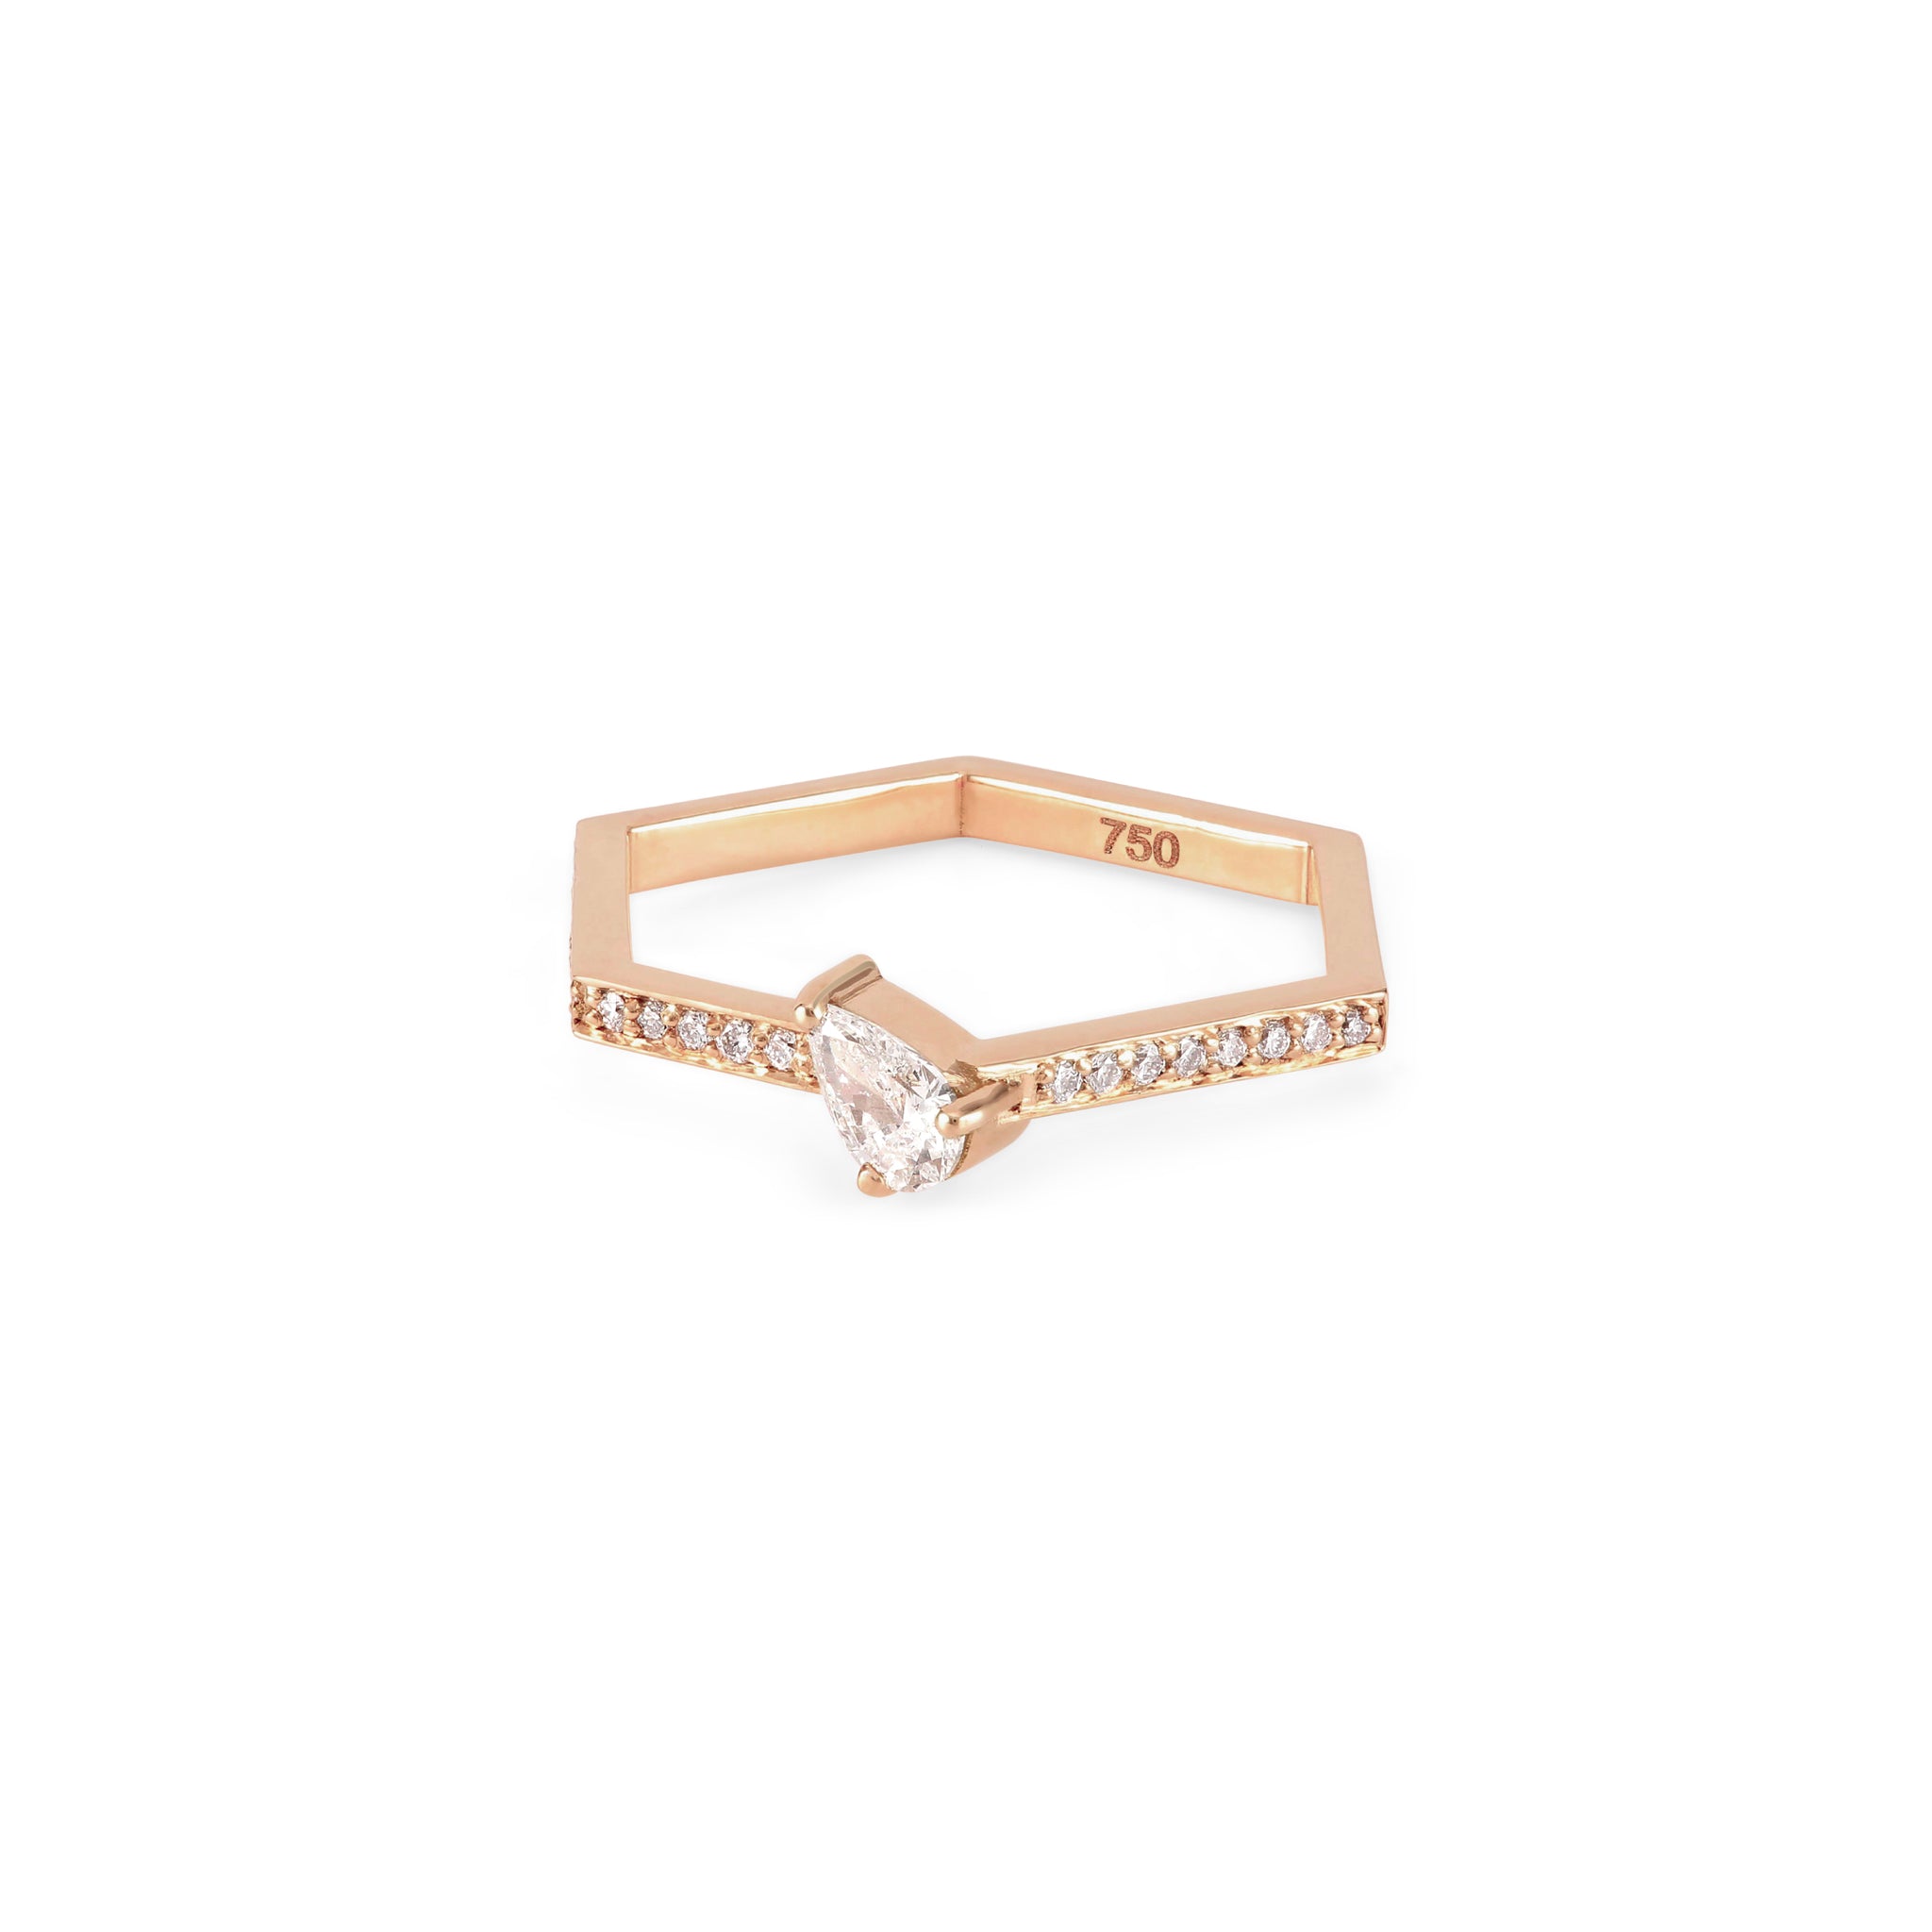 Hexad Diamond Ring in Rose Gold